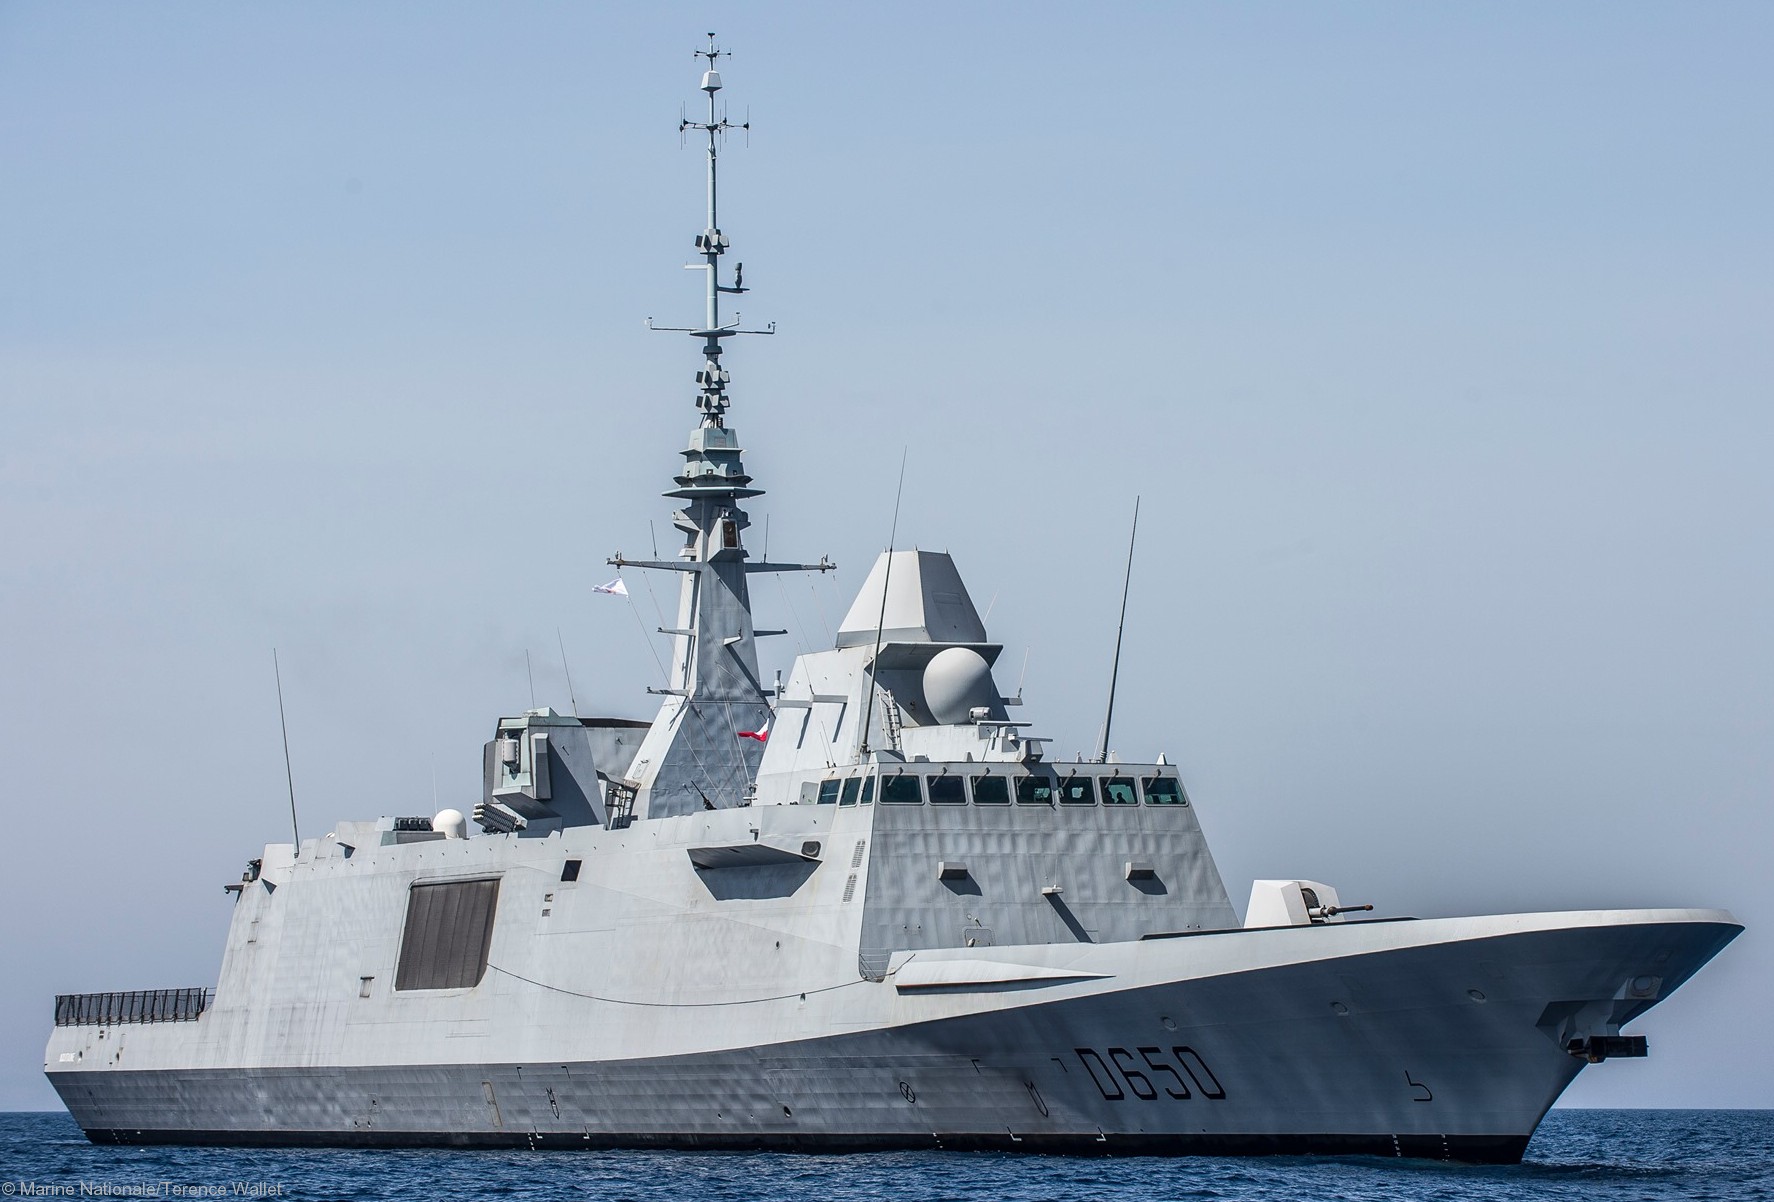 d-650 fs aquitaine fremm class frigate fregate multi purpose french navy marine nationale 24